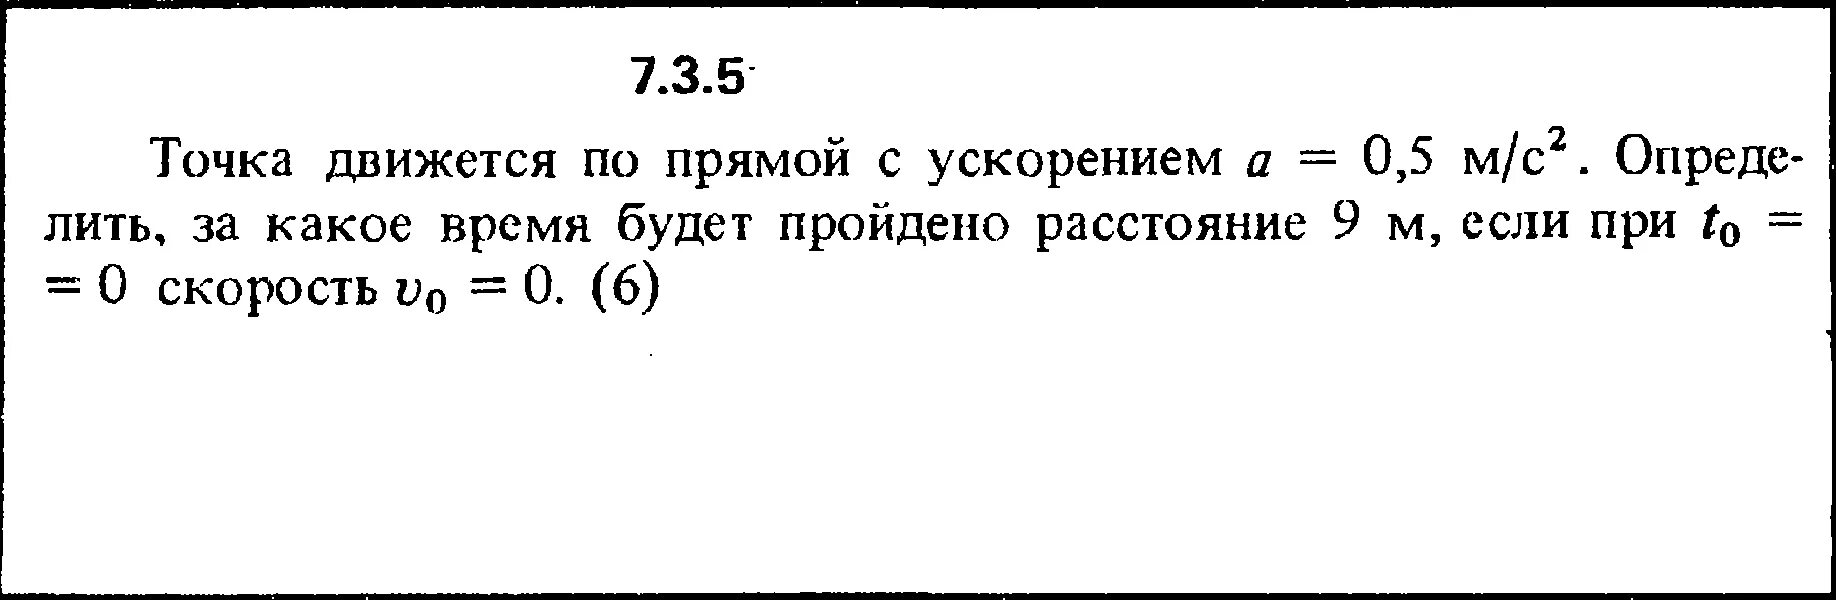 Решение задач 7.1.1 Кепе. Решение задачи 1.1.2 из сборника Кепе о.е. 1989 года. Кепе 7.3. Падж с ускорением ушел.